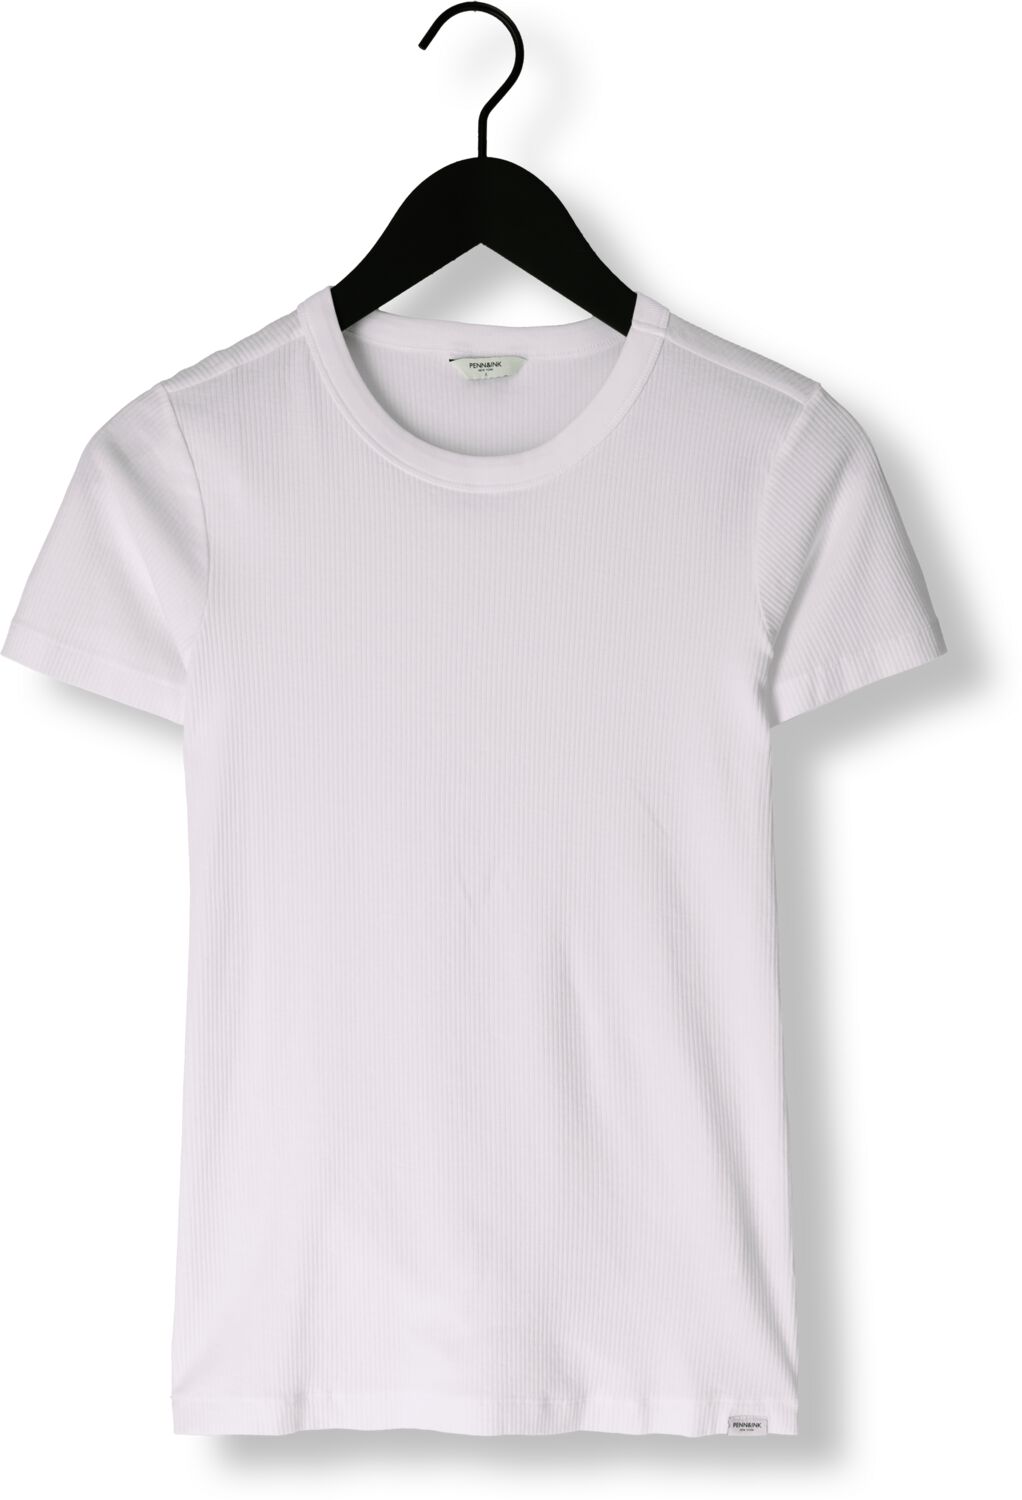 PENN & INK Dames Tops & T-shirts T-shirt Ecru